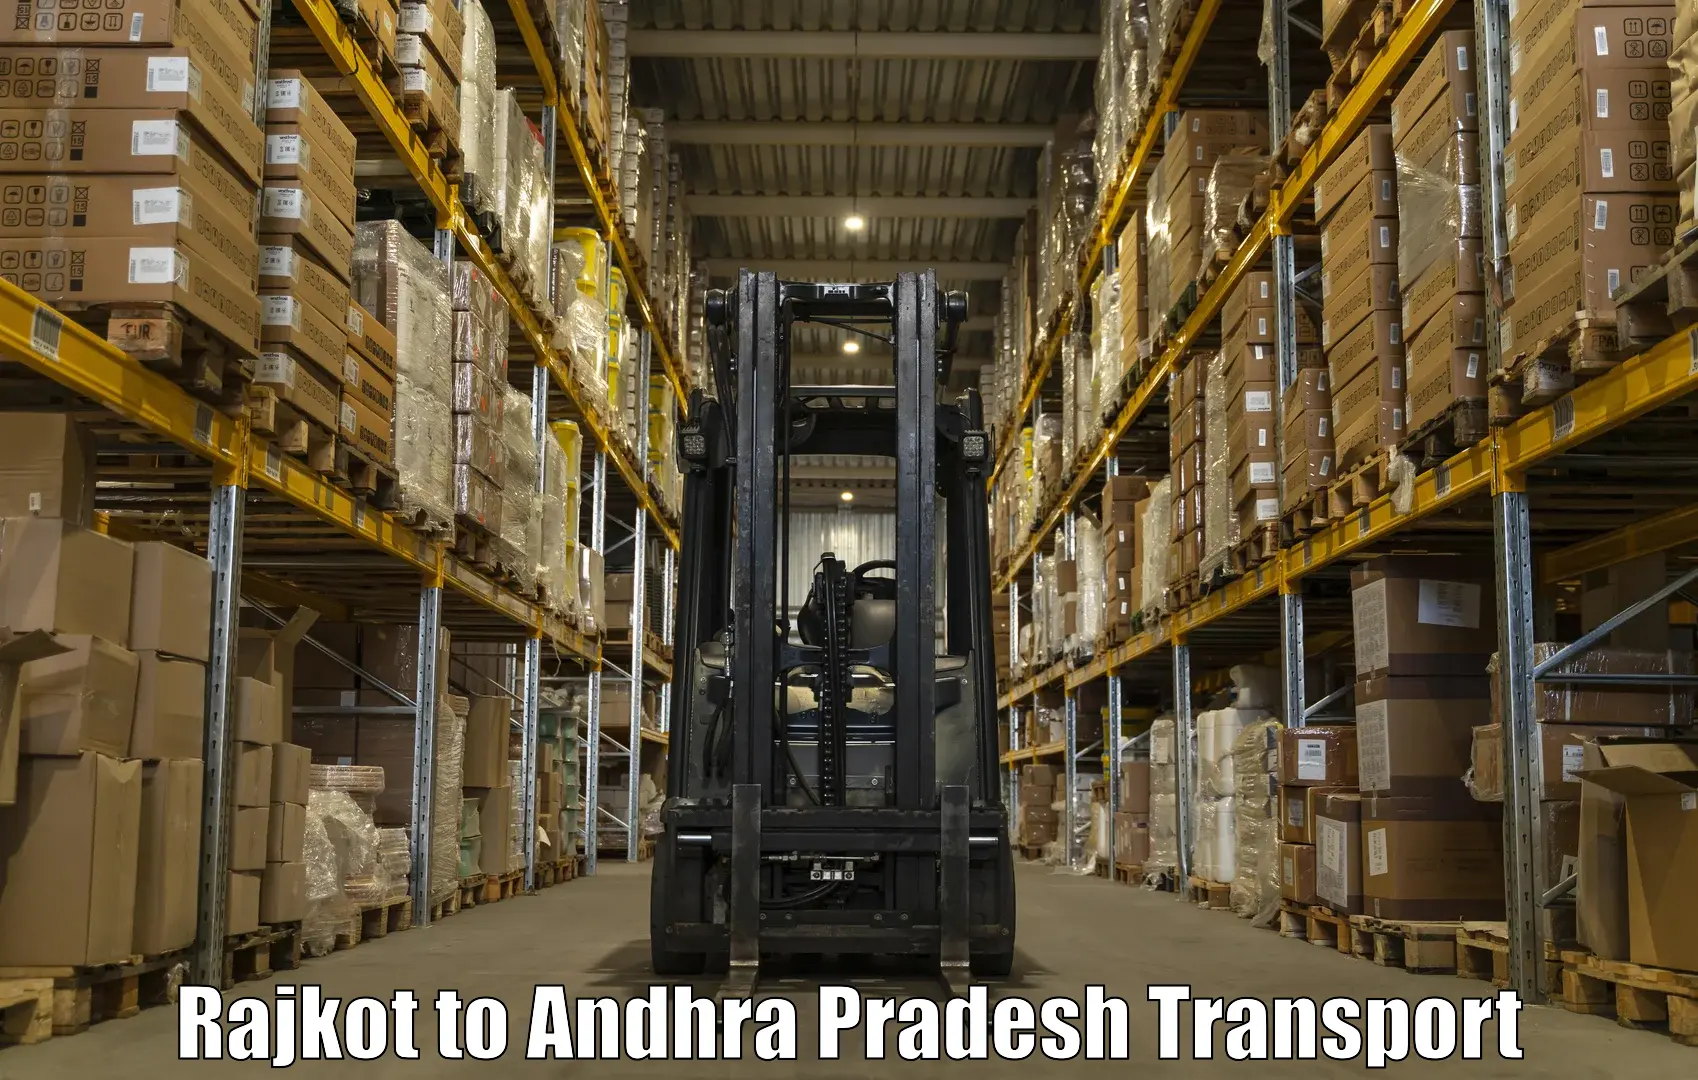 Truck transport companies in India Rajkot to Draksharamam